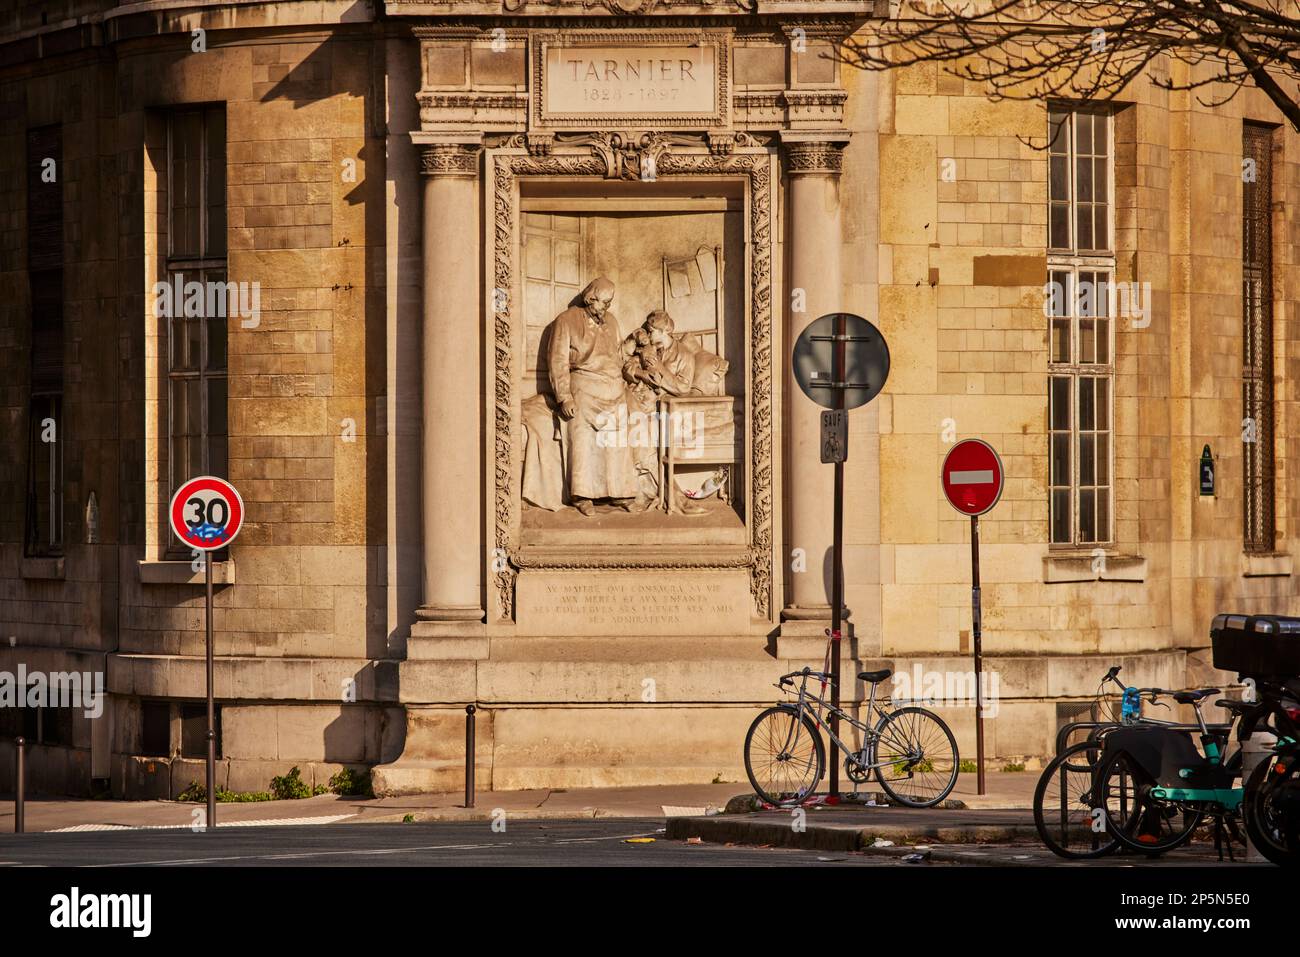 Paris landmark, Monument of Tarnier at the corner of Avenue de l'Observatoire and Rue d'Assas, Stock Photo